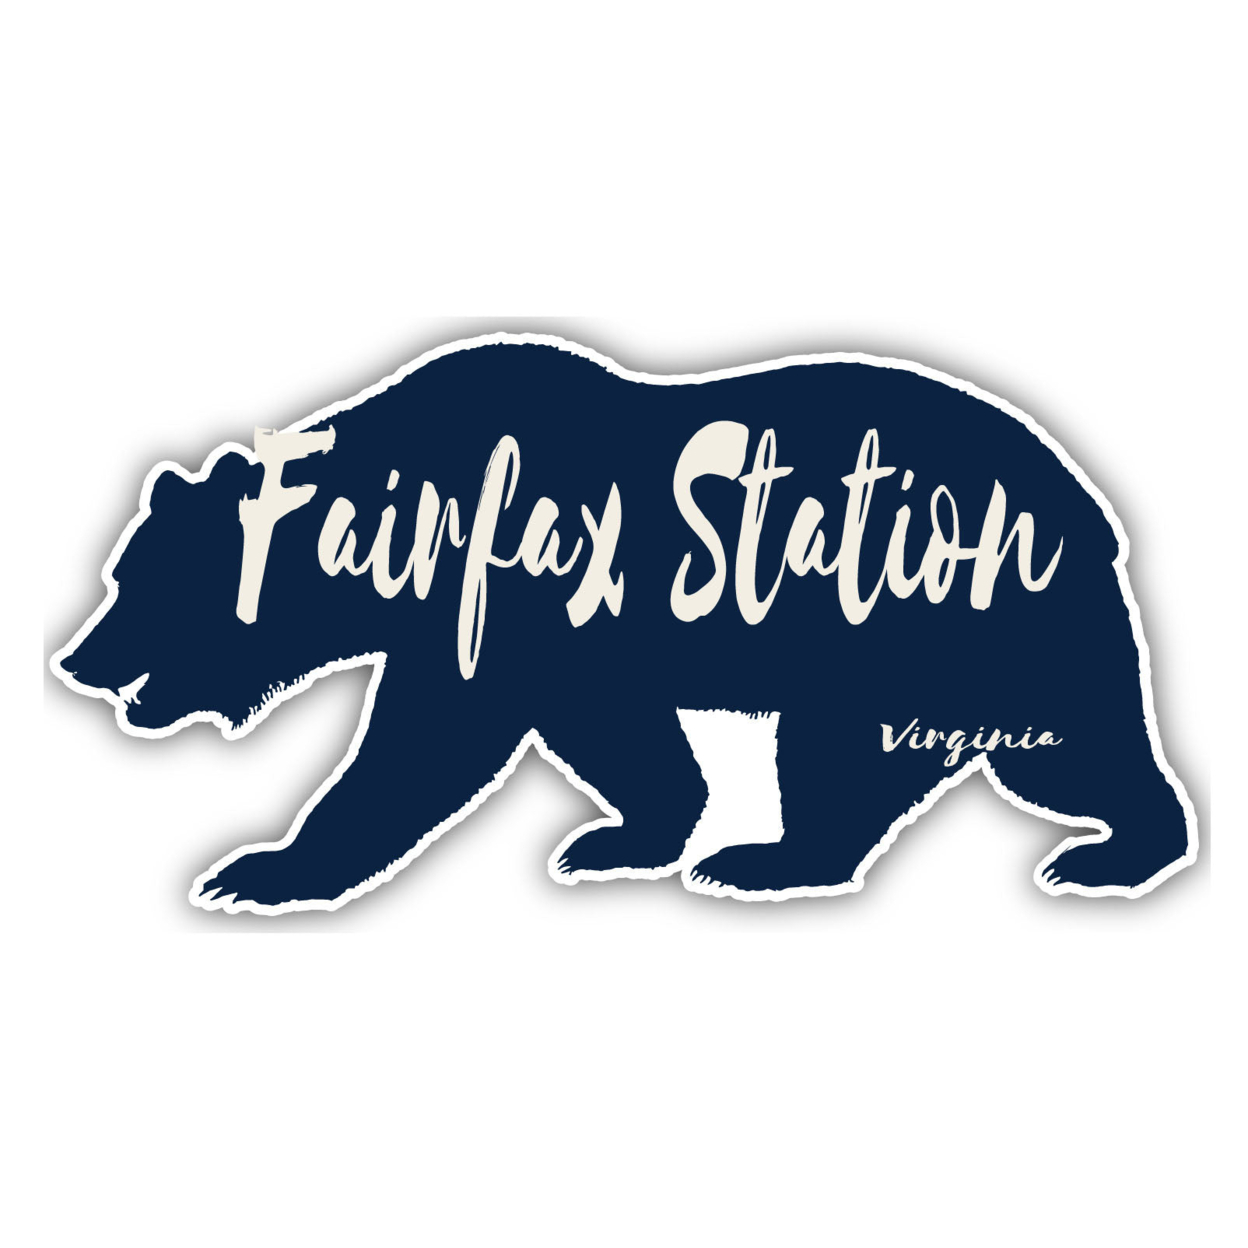 Fairfax Station Virginia Souvenir Decorative Stickers (Choose Theme And Size) - Single Unit, 12-Inch, Bear